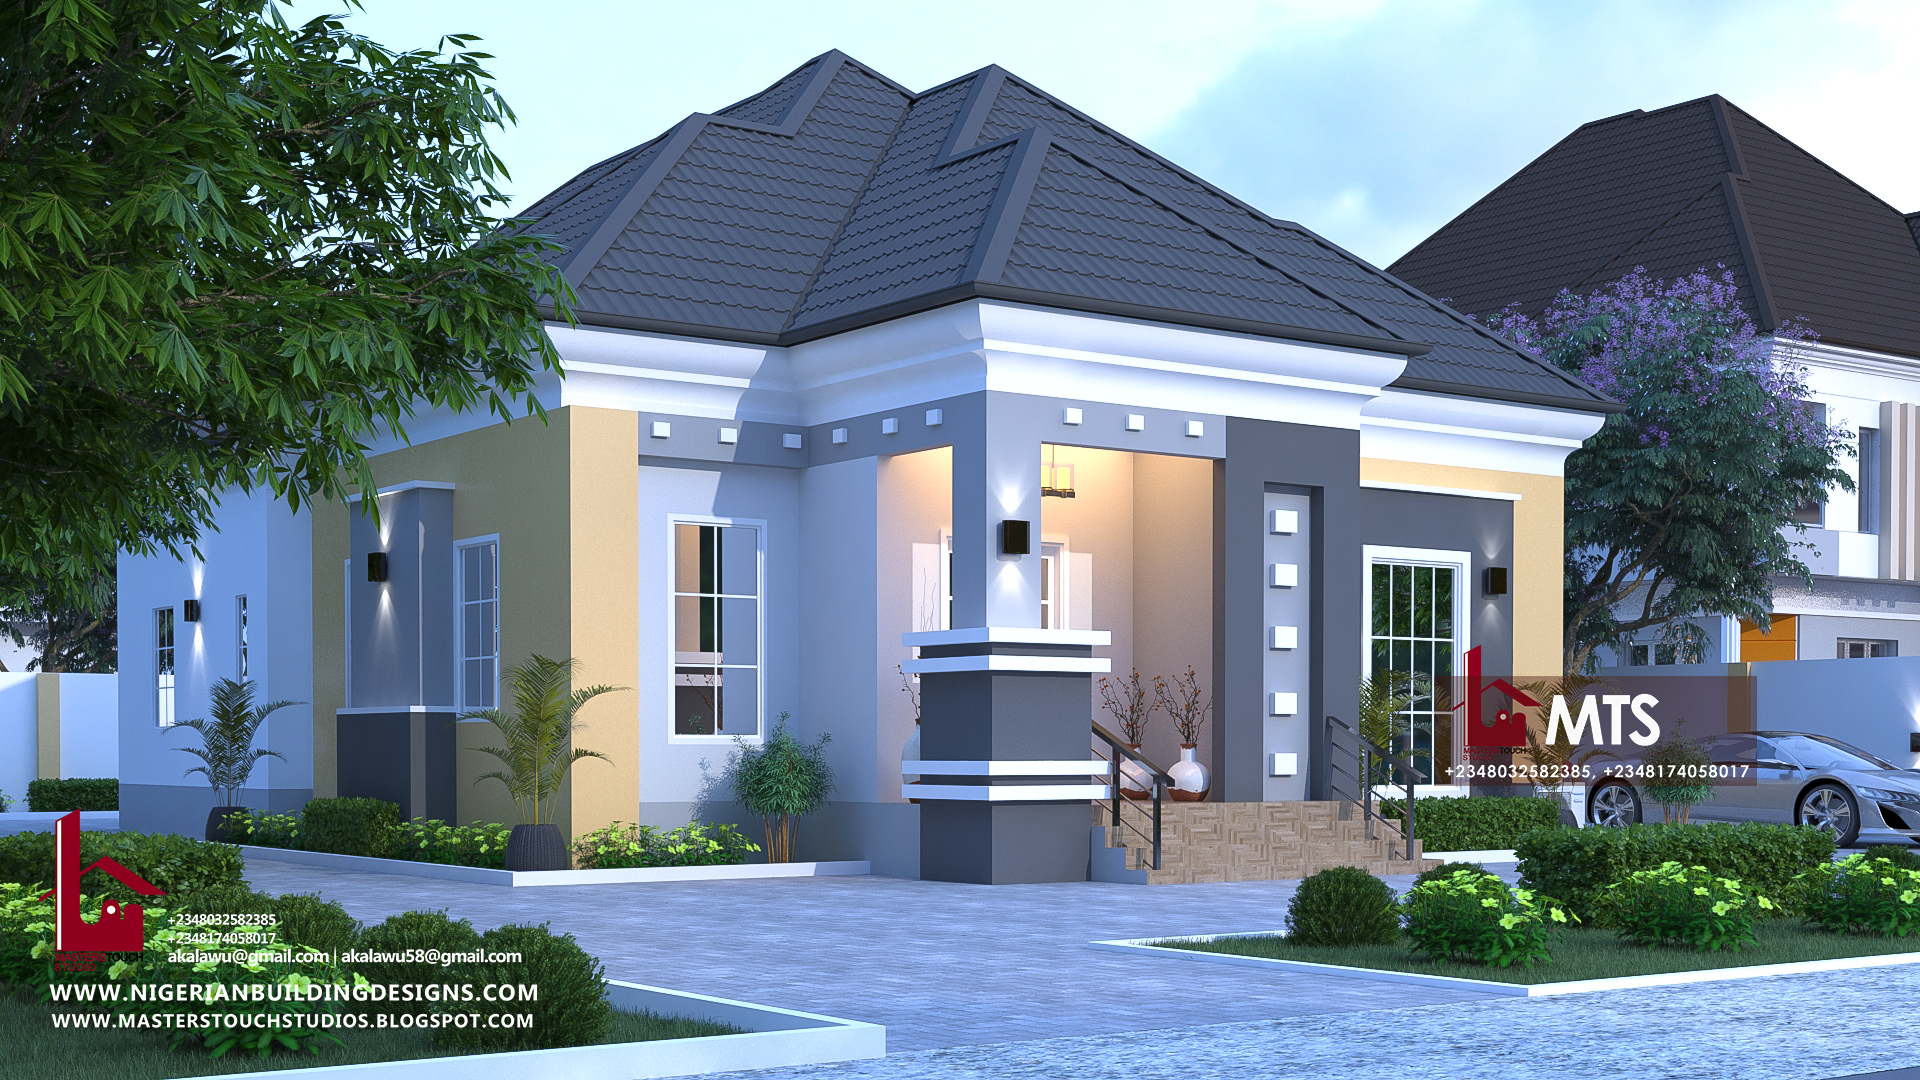 3 Bedroom Bungalow Rf 3005 Nigerian Building Designs